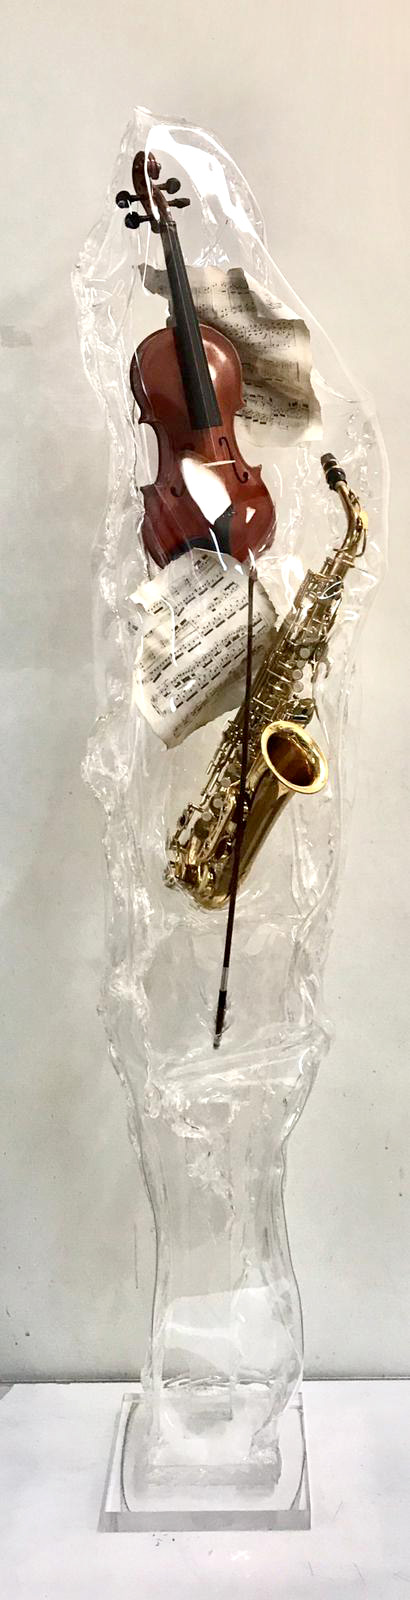 franck-tordjmann-sculpture-violon-saxophone-plexiglas